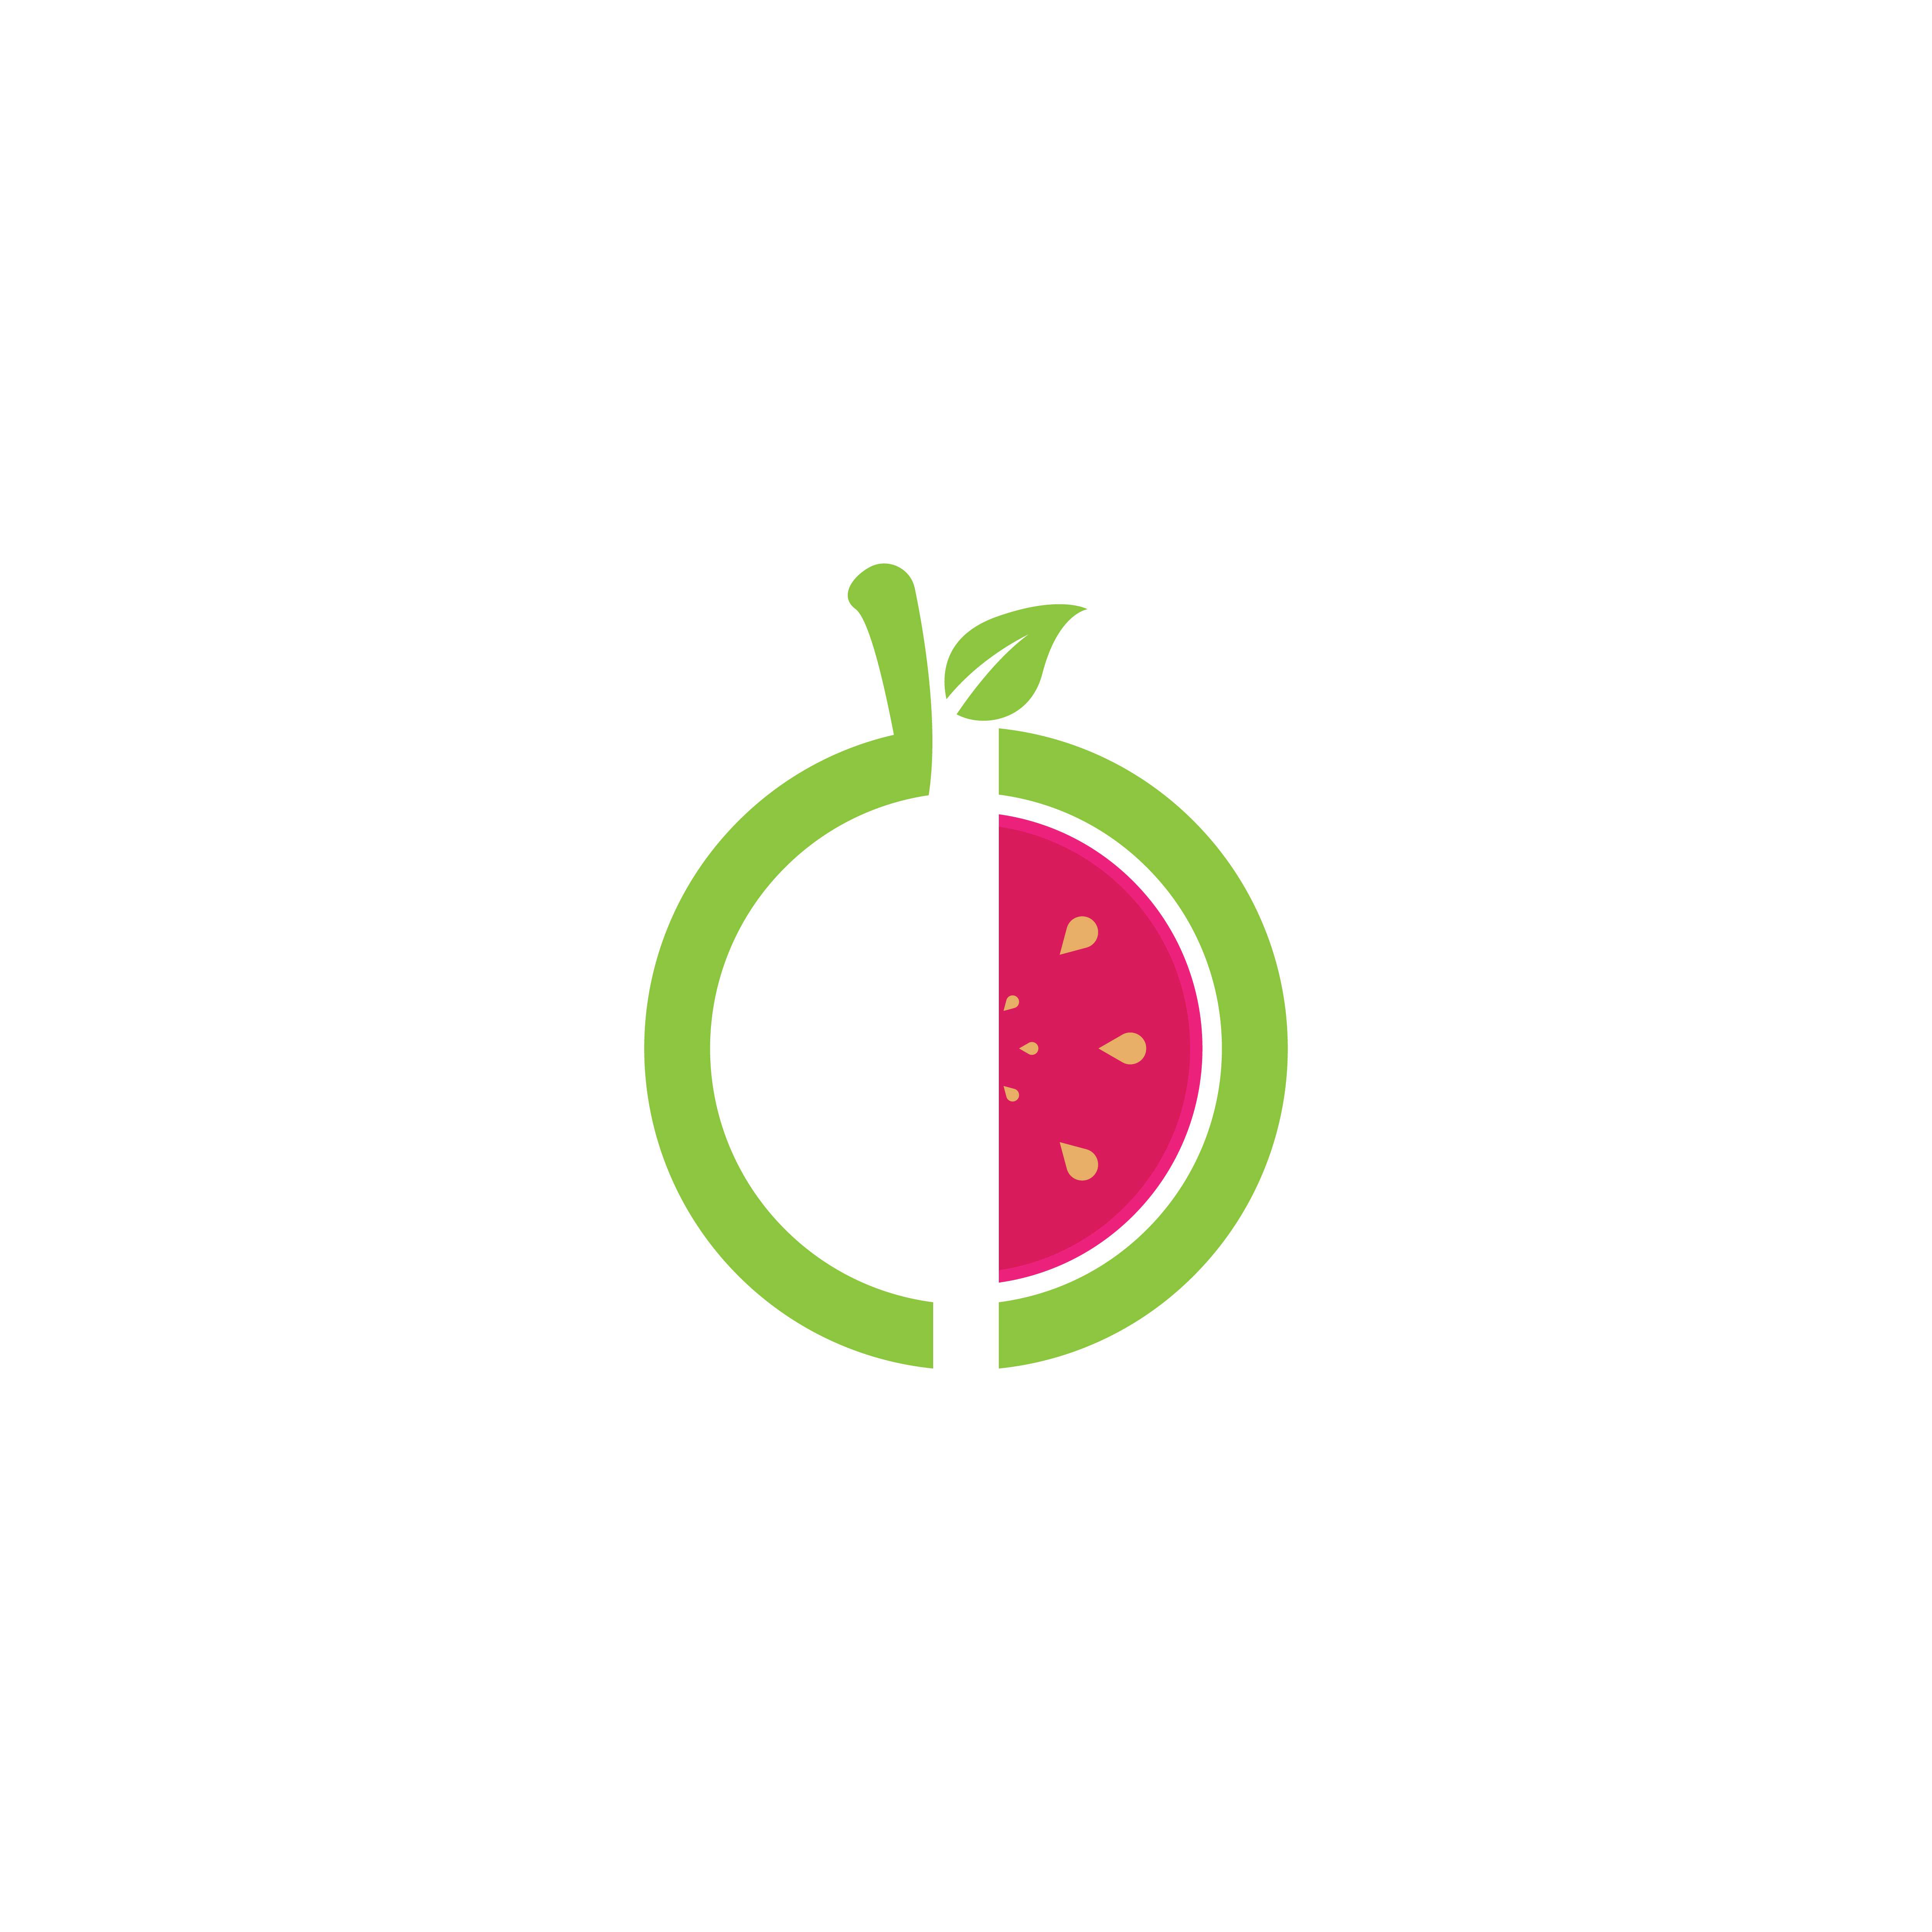 Guava logo template vector icon design